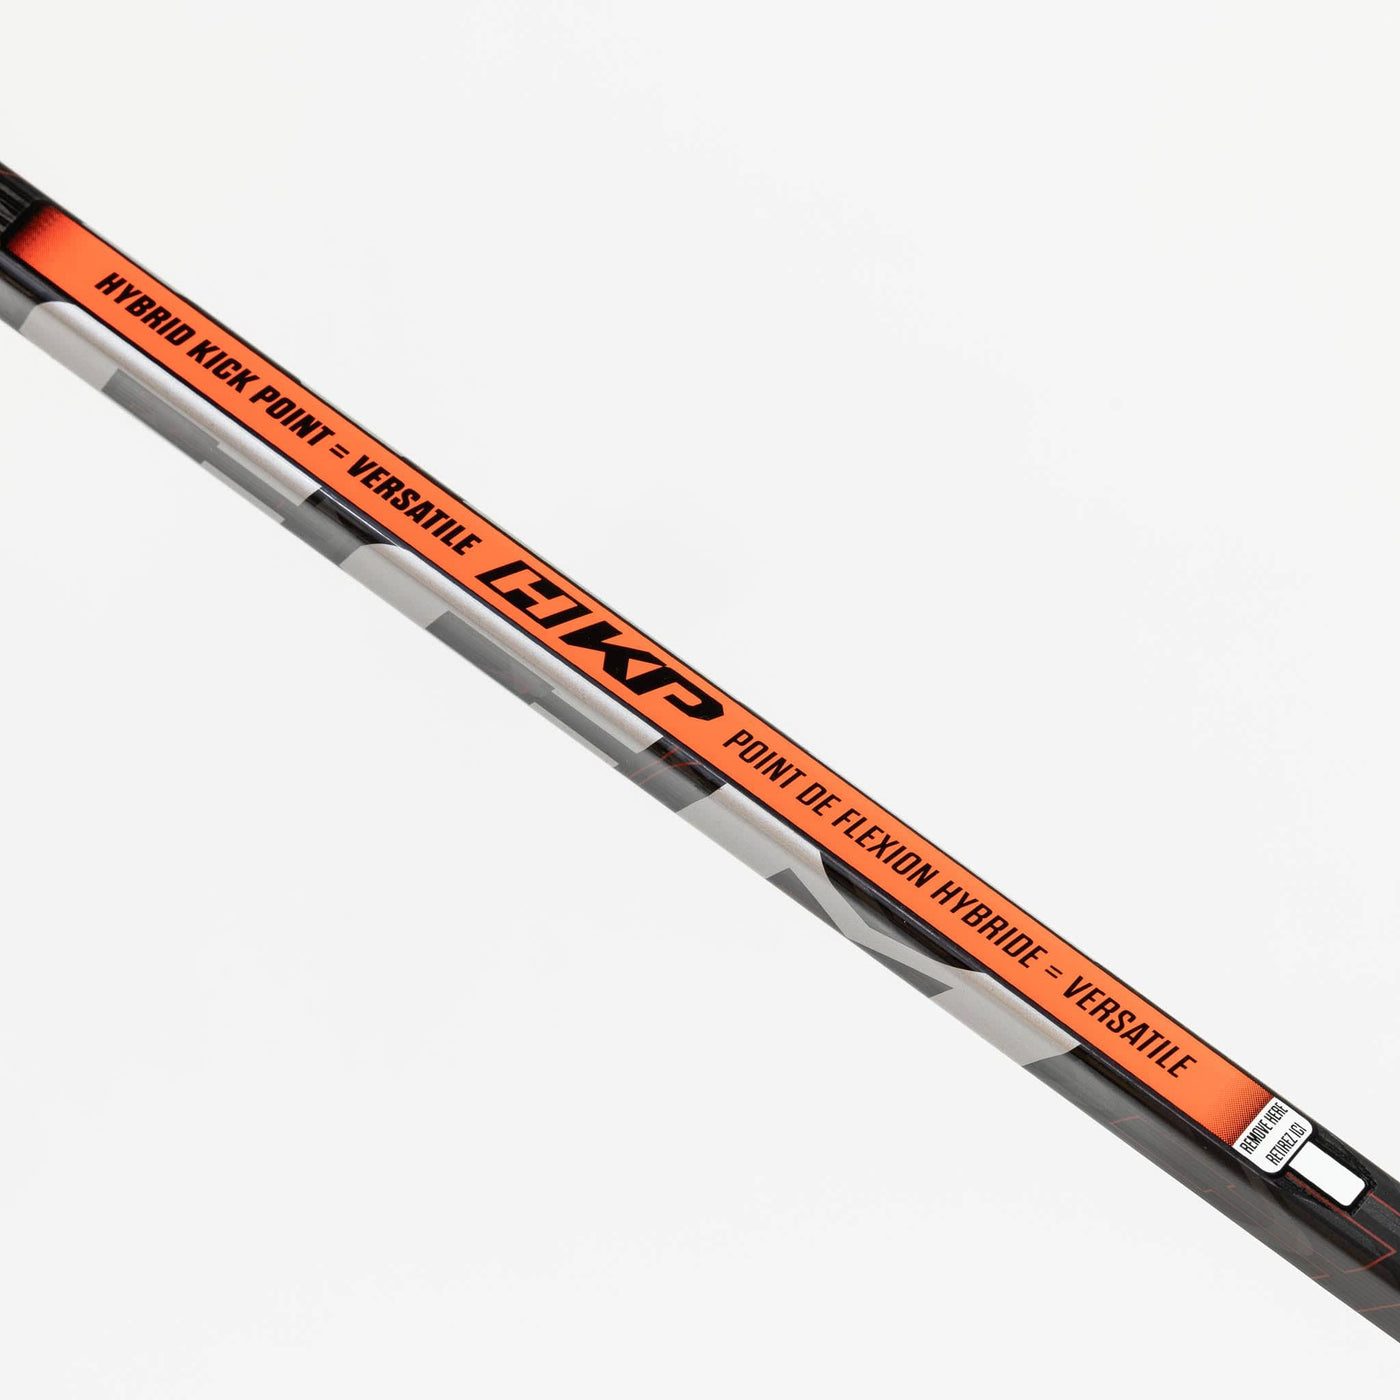 CCM Jetspeed FT5 Senior Hockey Stick - The Hockey Shop Source For Sports